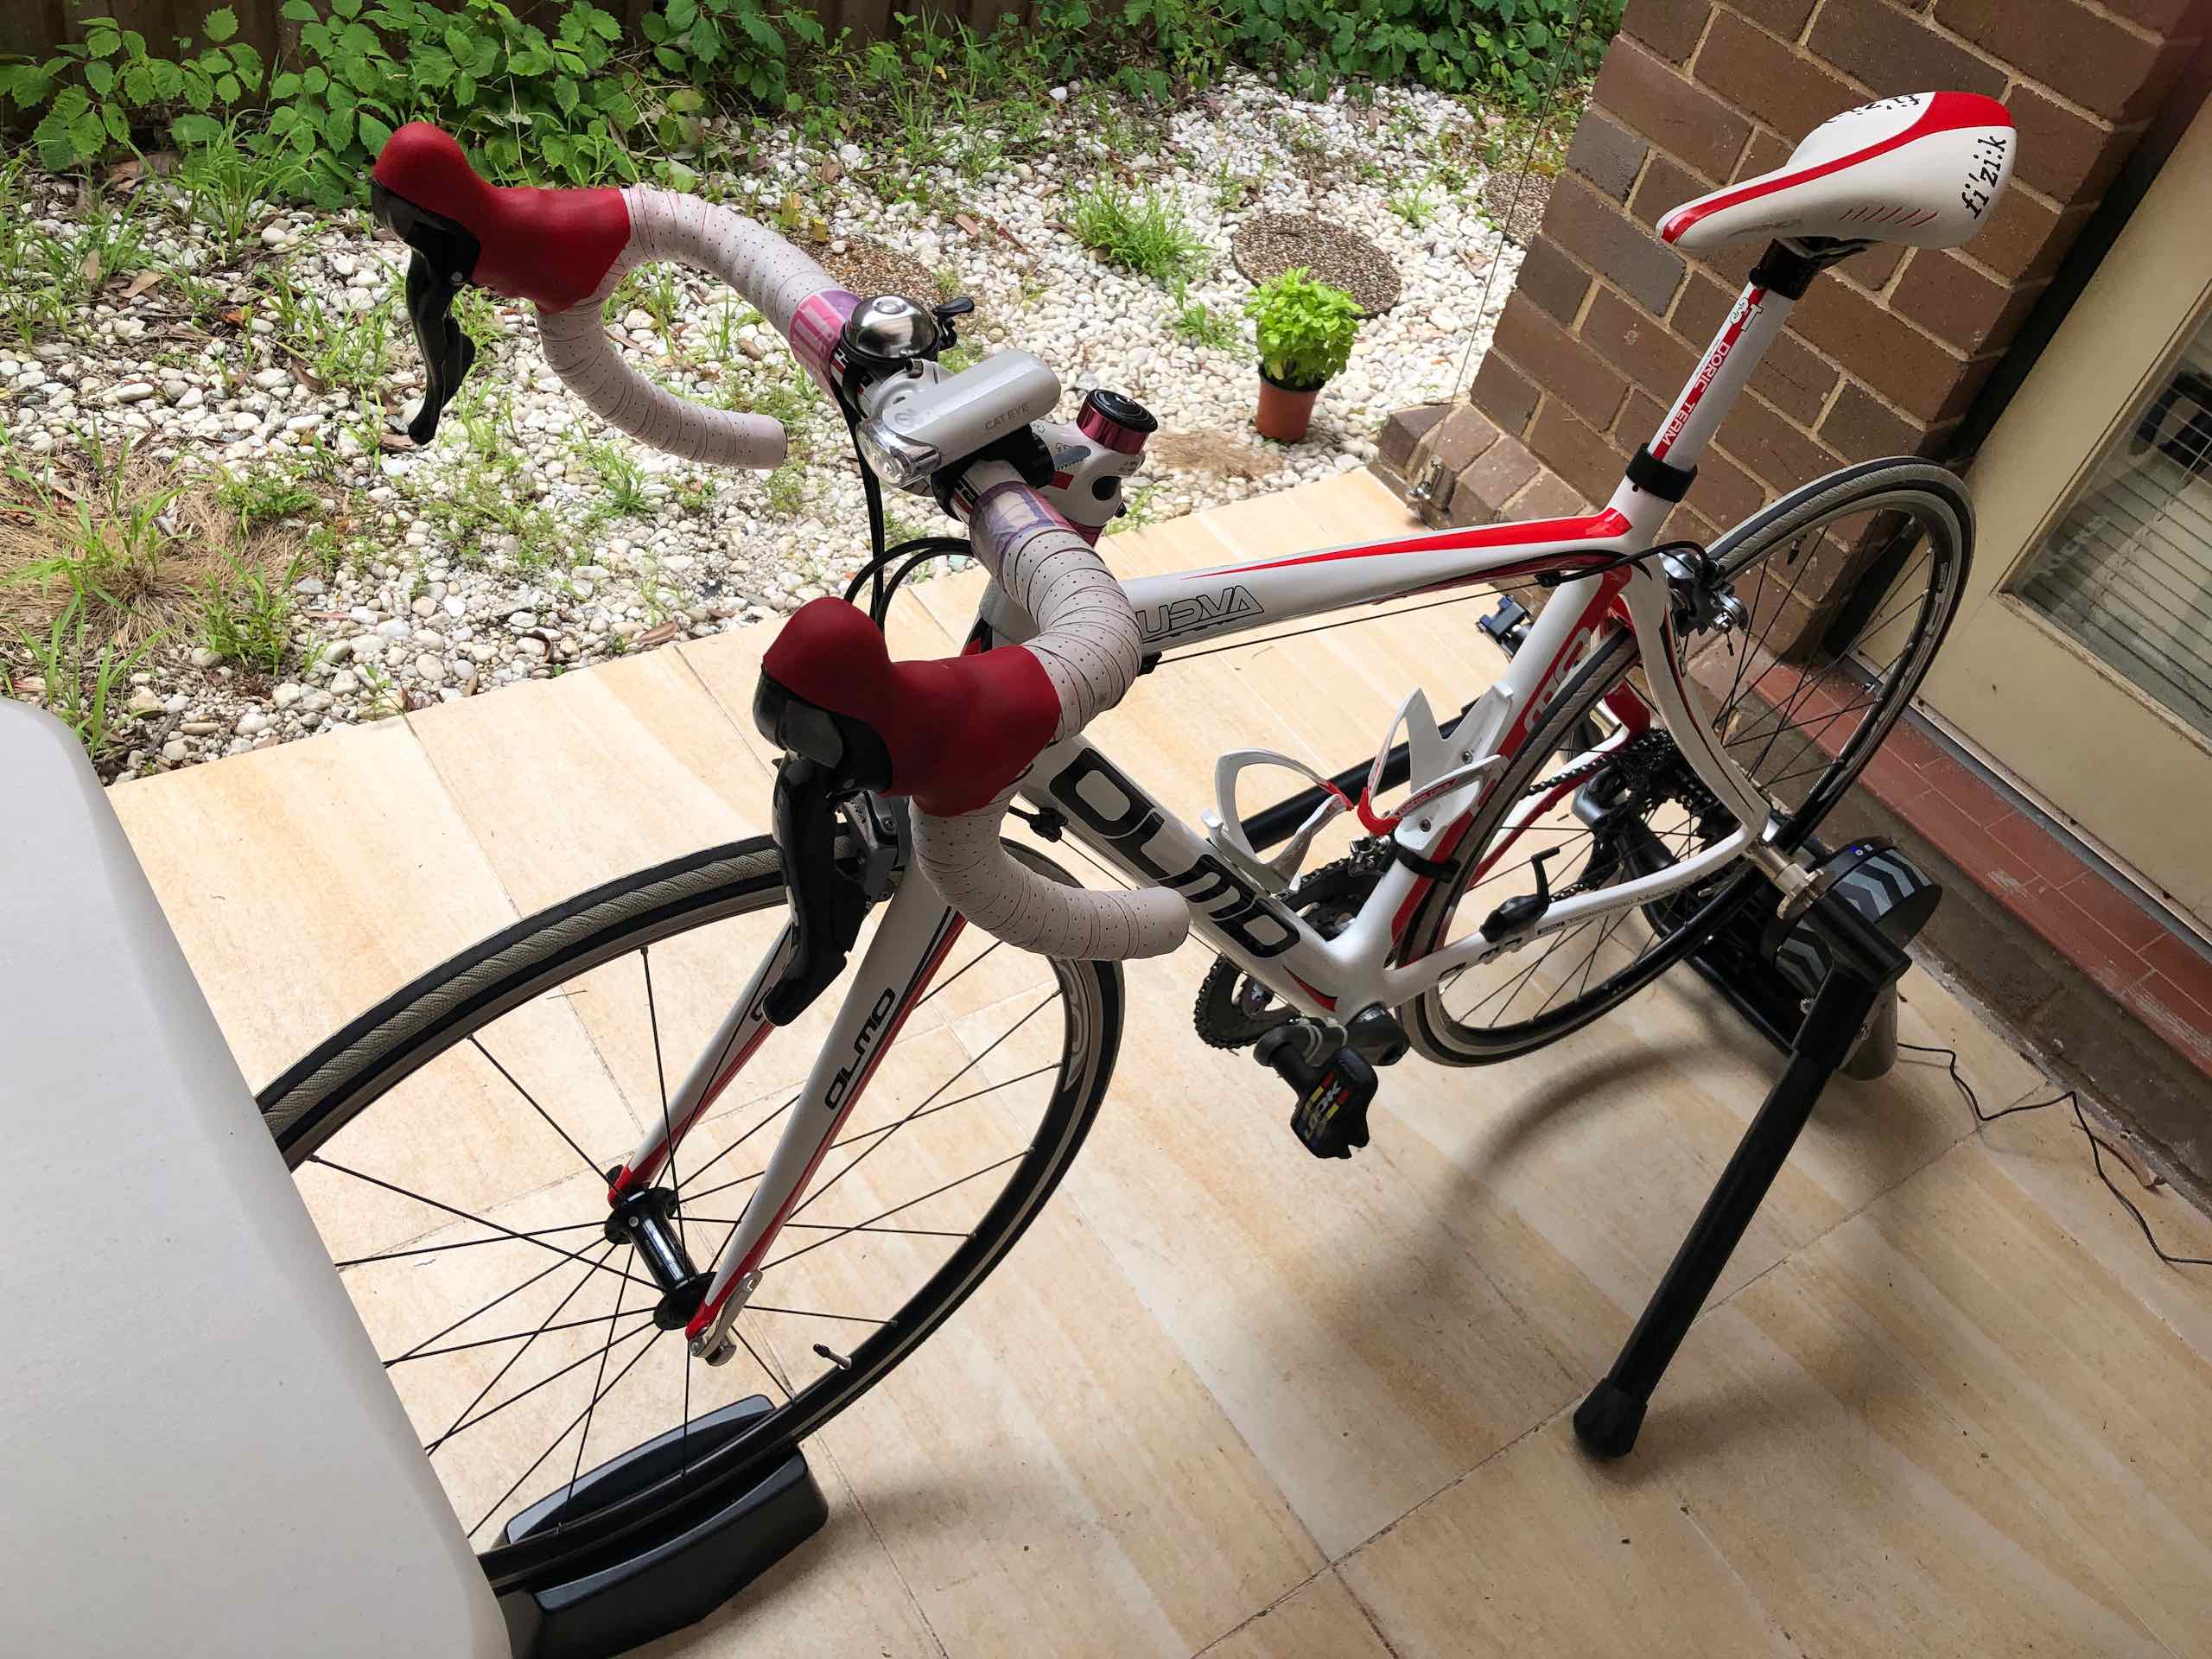 Stationary bike featured image